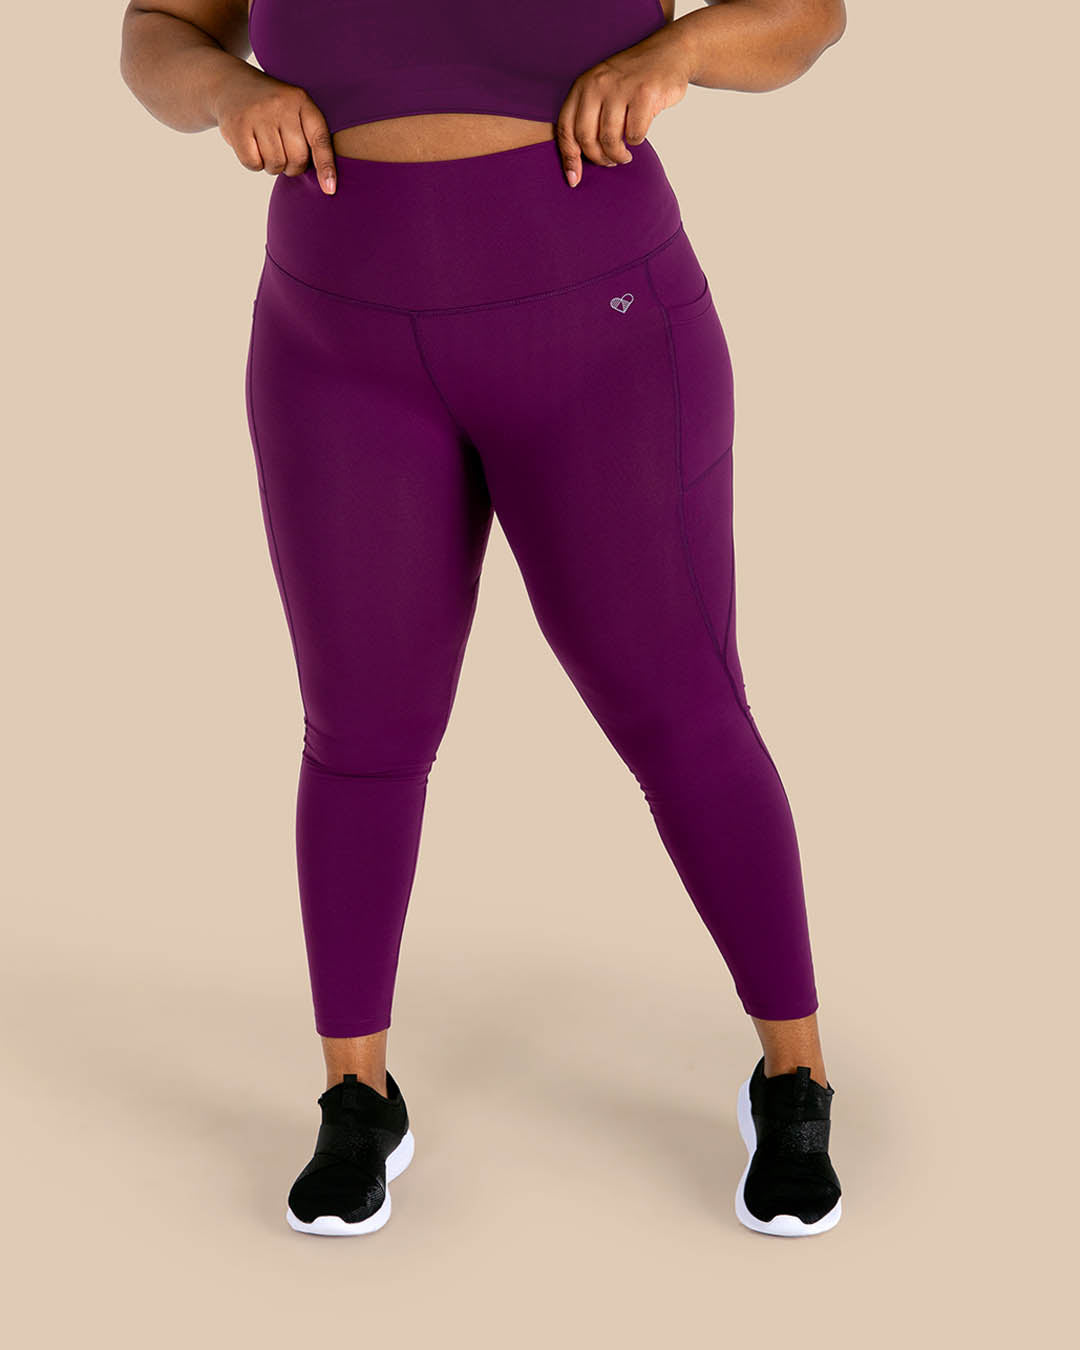 Wild style 1 lavender plus size leggings - wild peach clothing